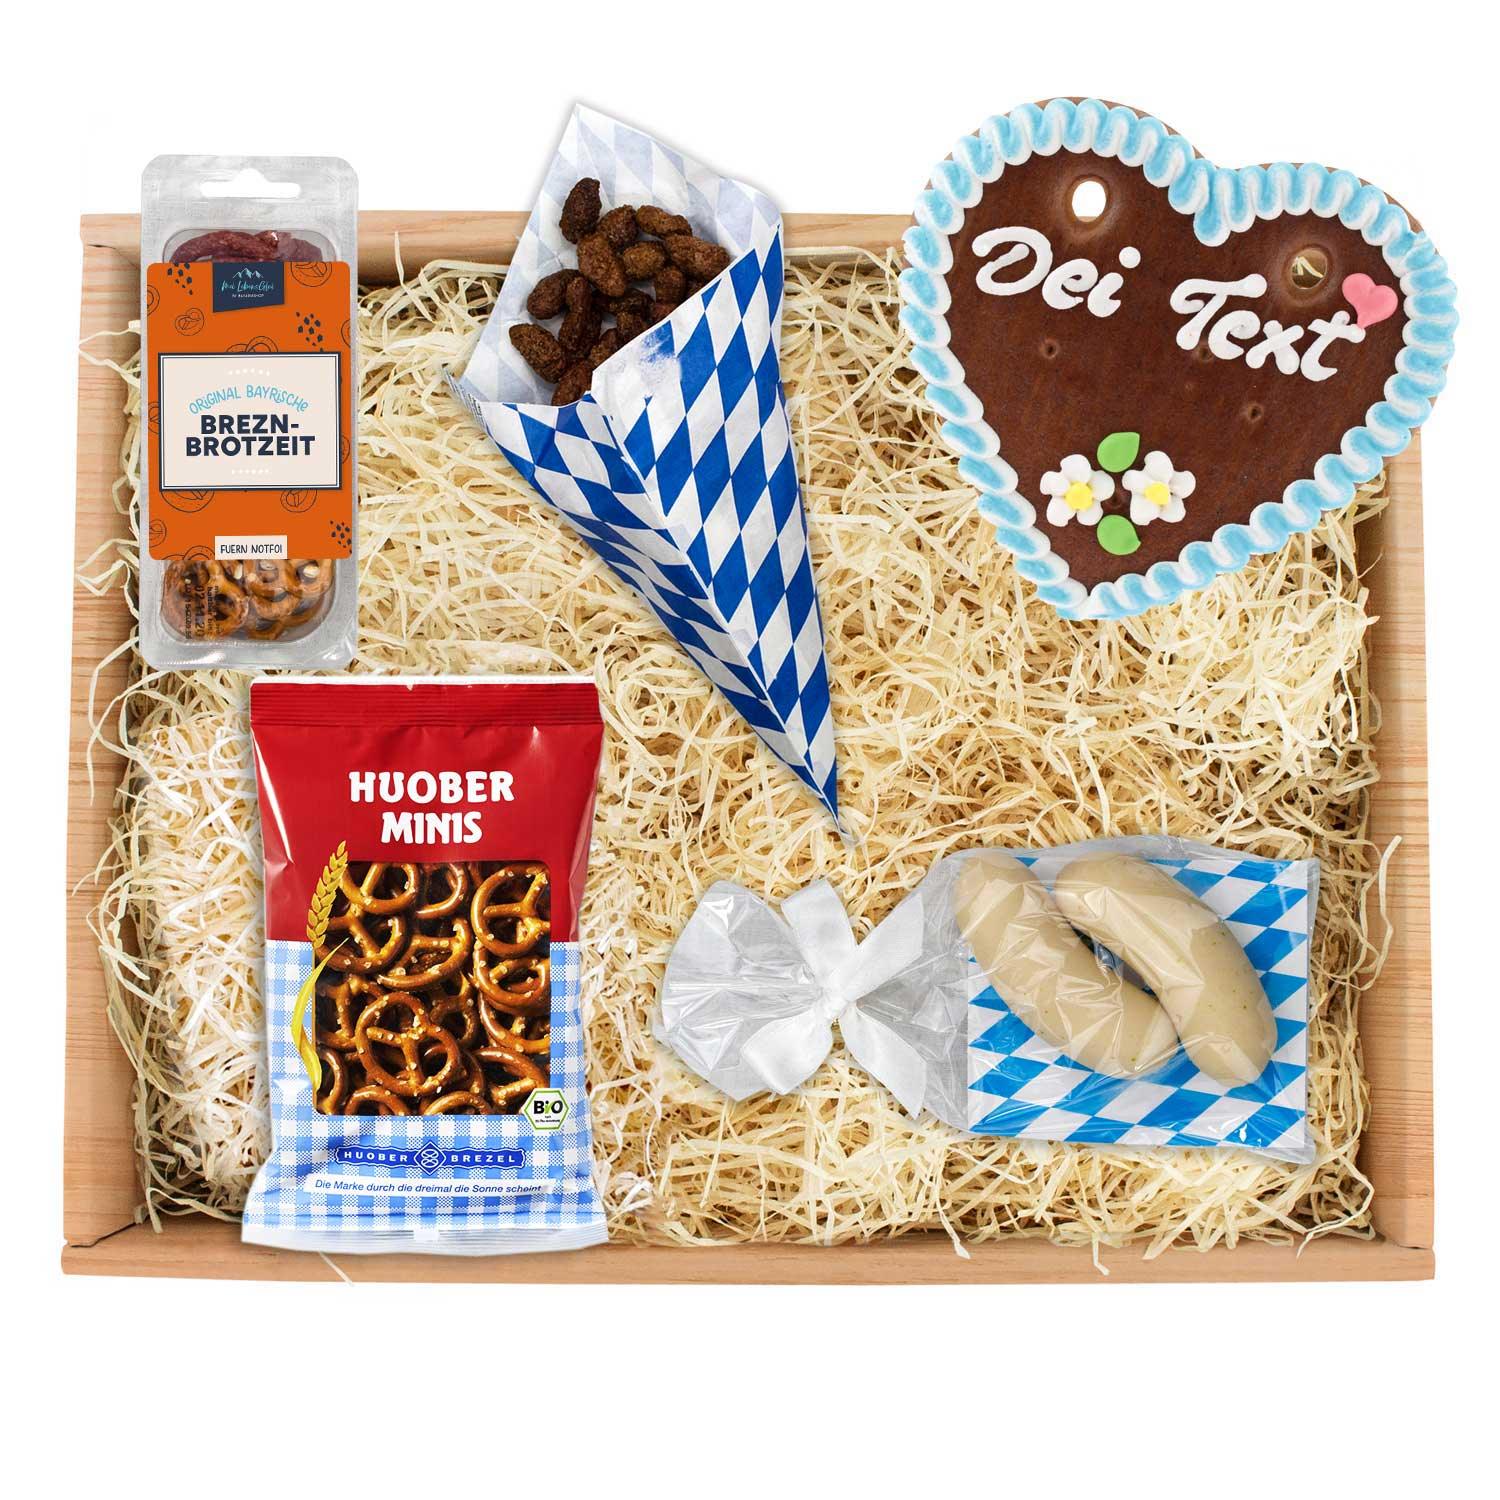 Oktoberfest-Box "Persönlich" - bavariashop - mei LebensGfui